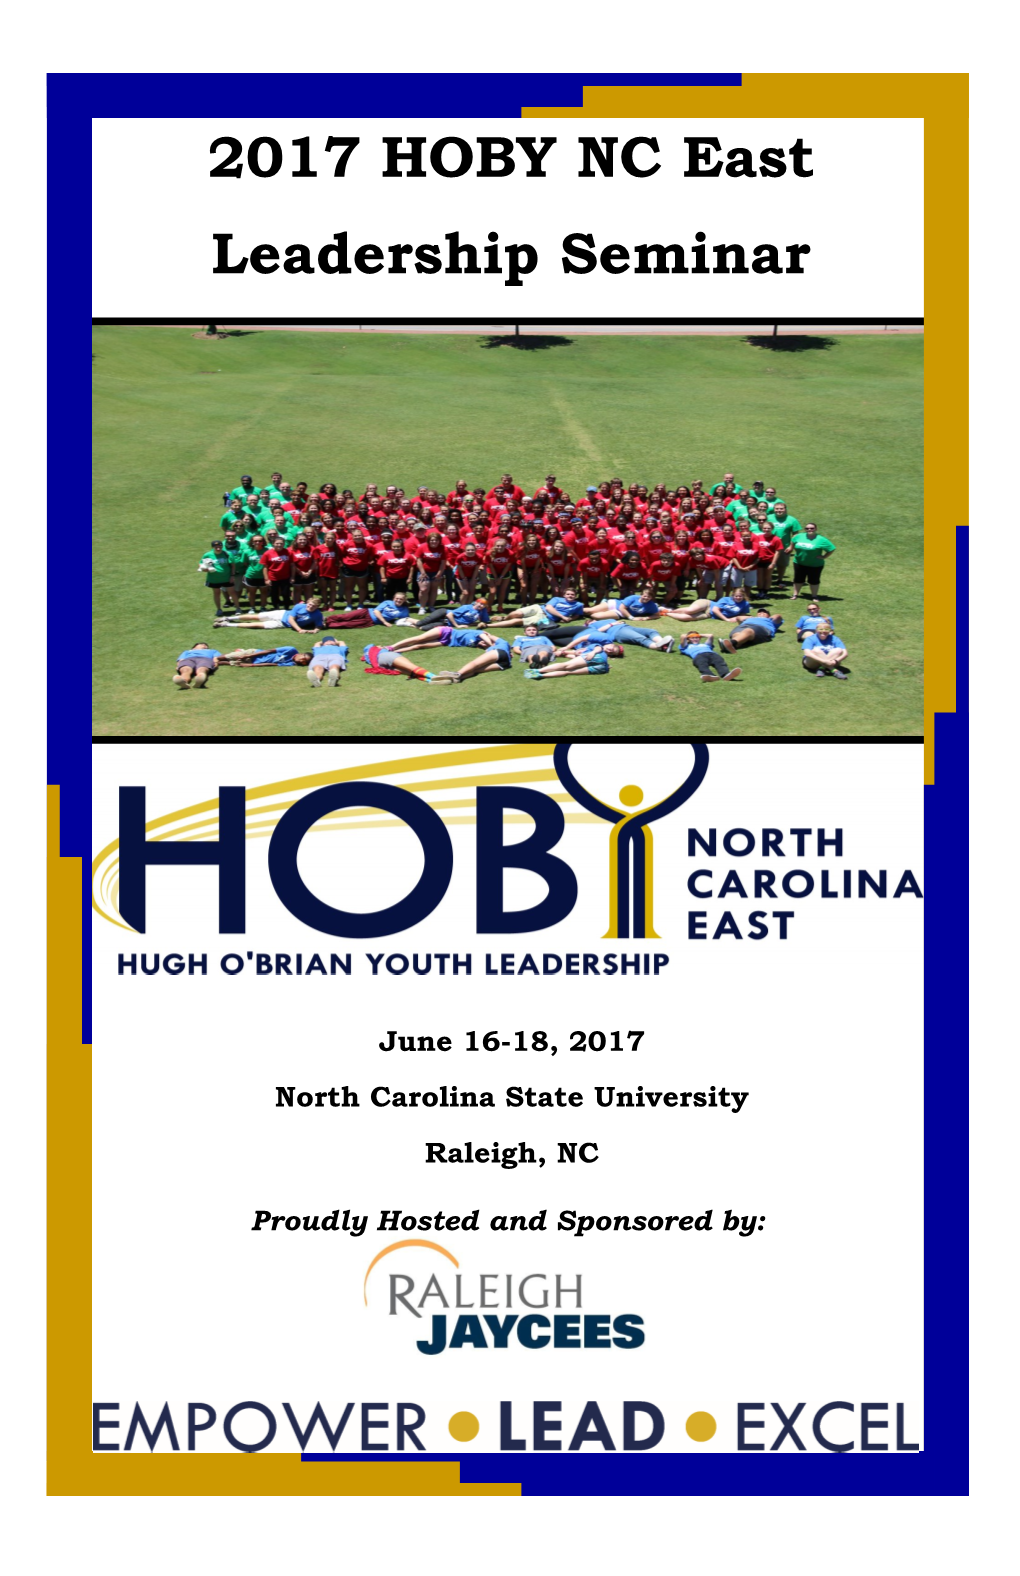 2017 HOBY NC East Leadership Seminar